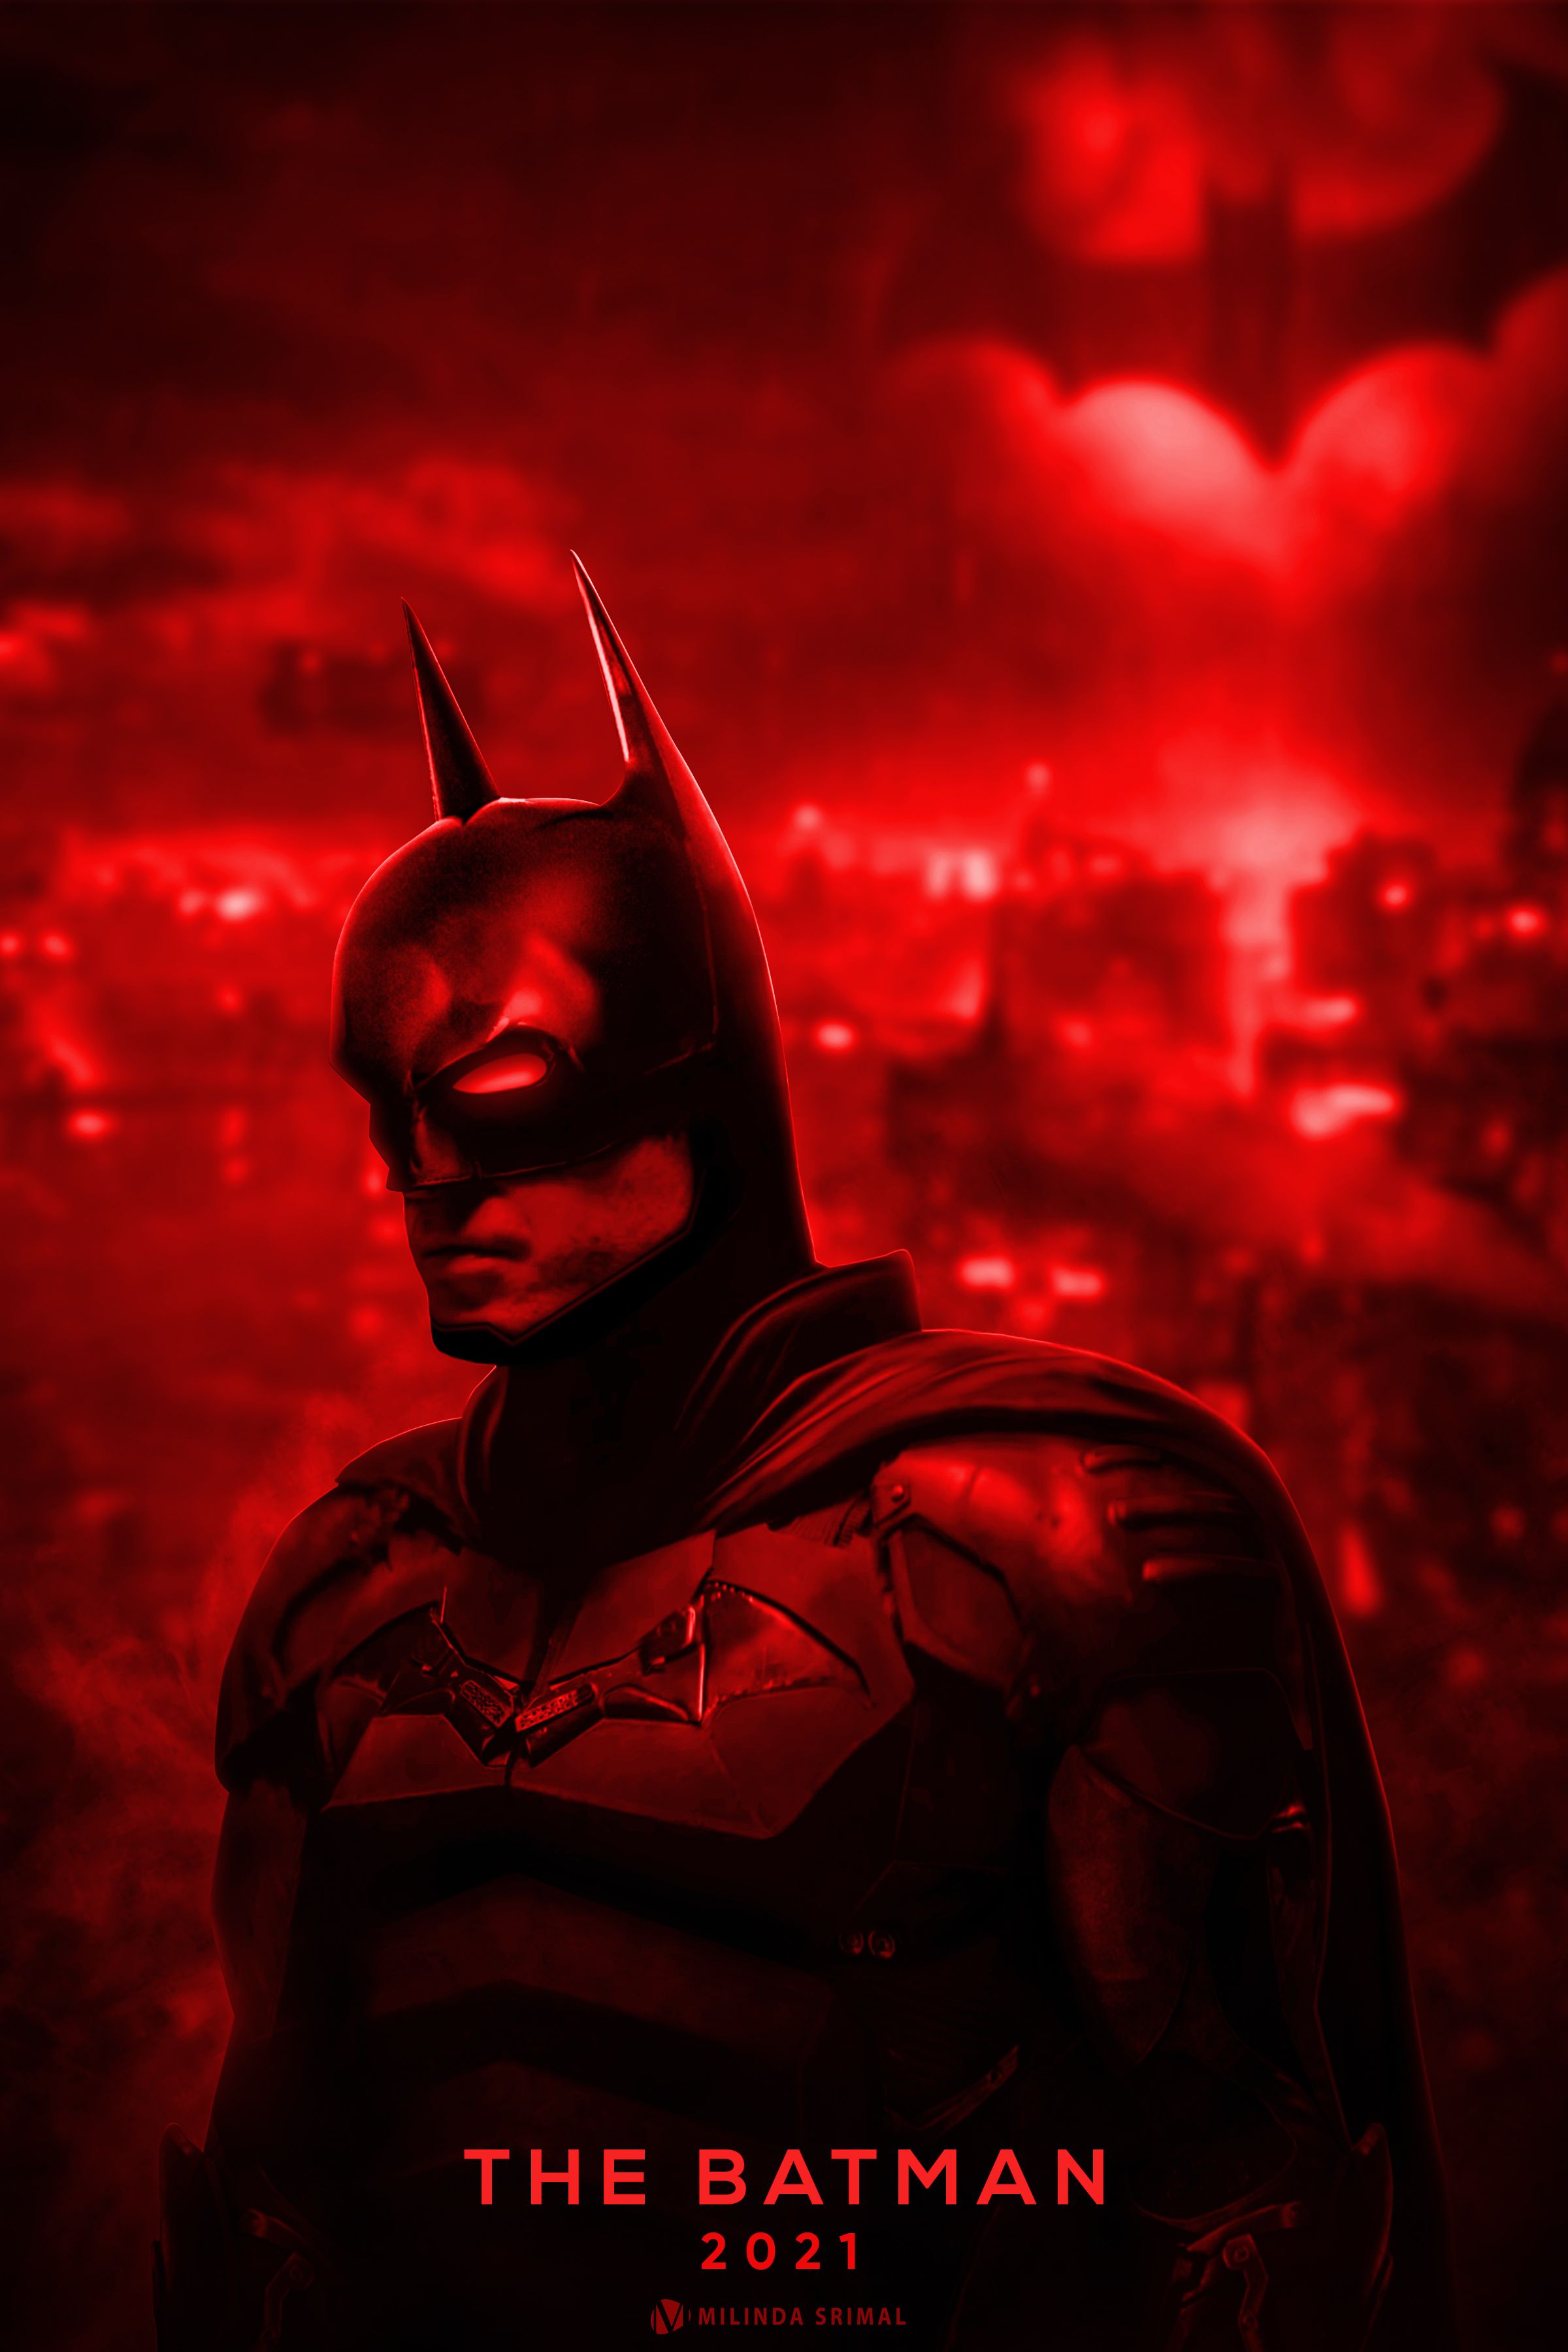 Robert Pattinsons The batman 2021. Batman, Movie posters